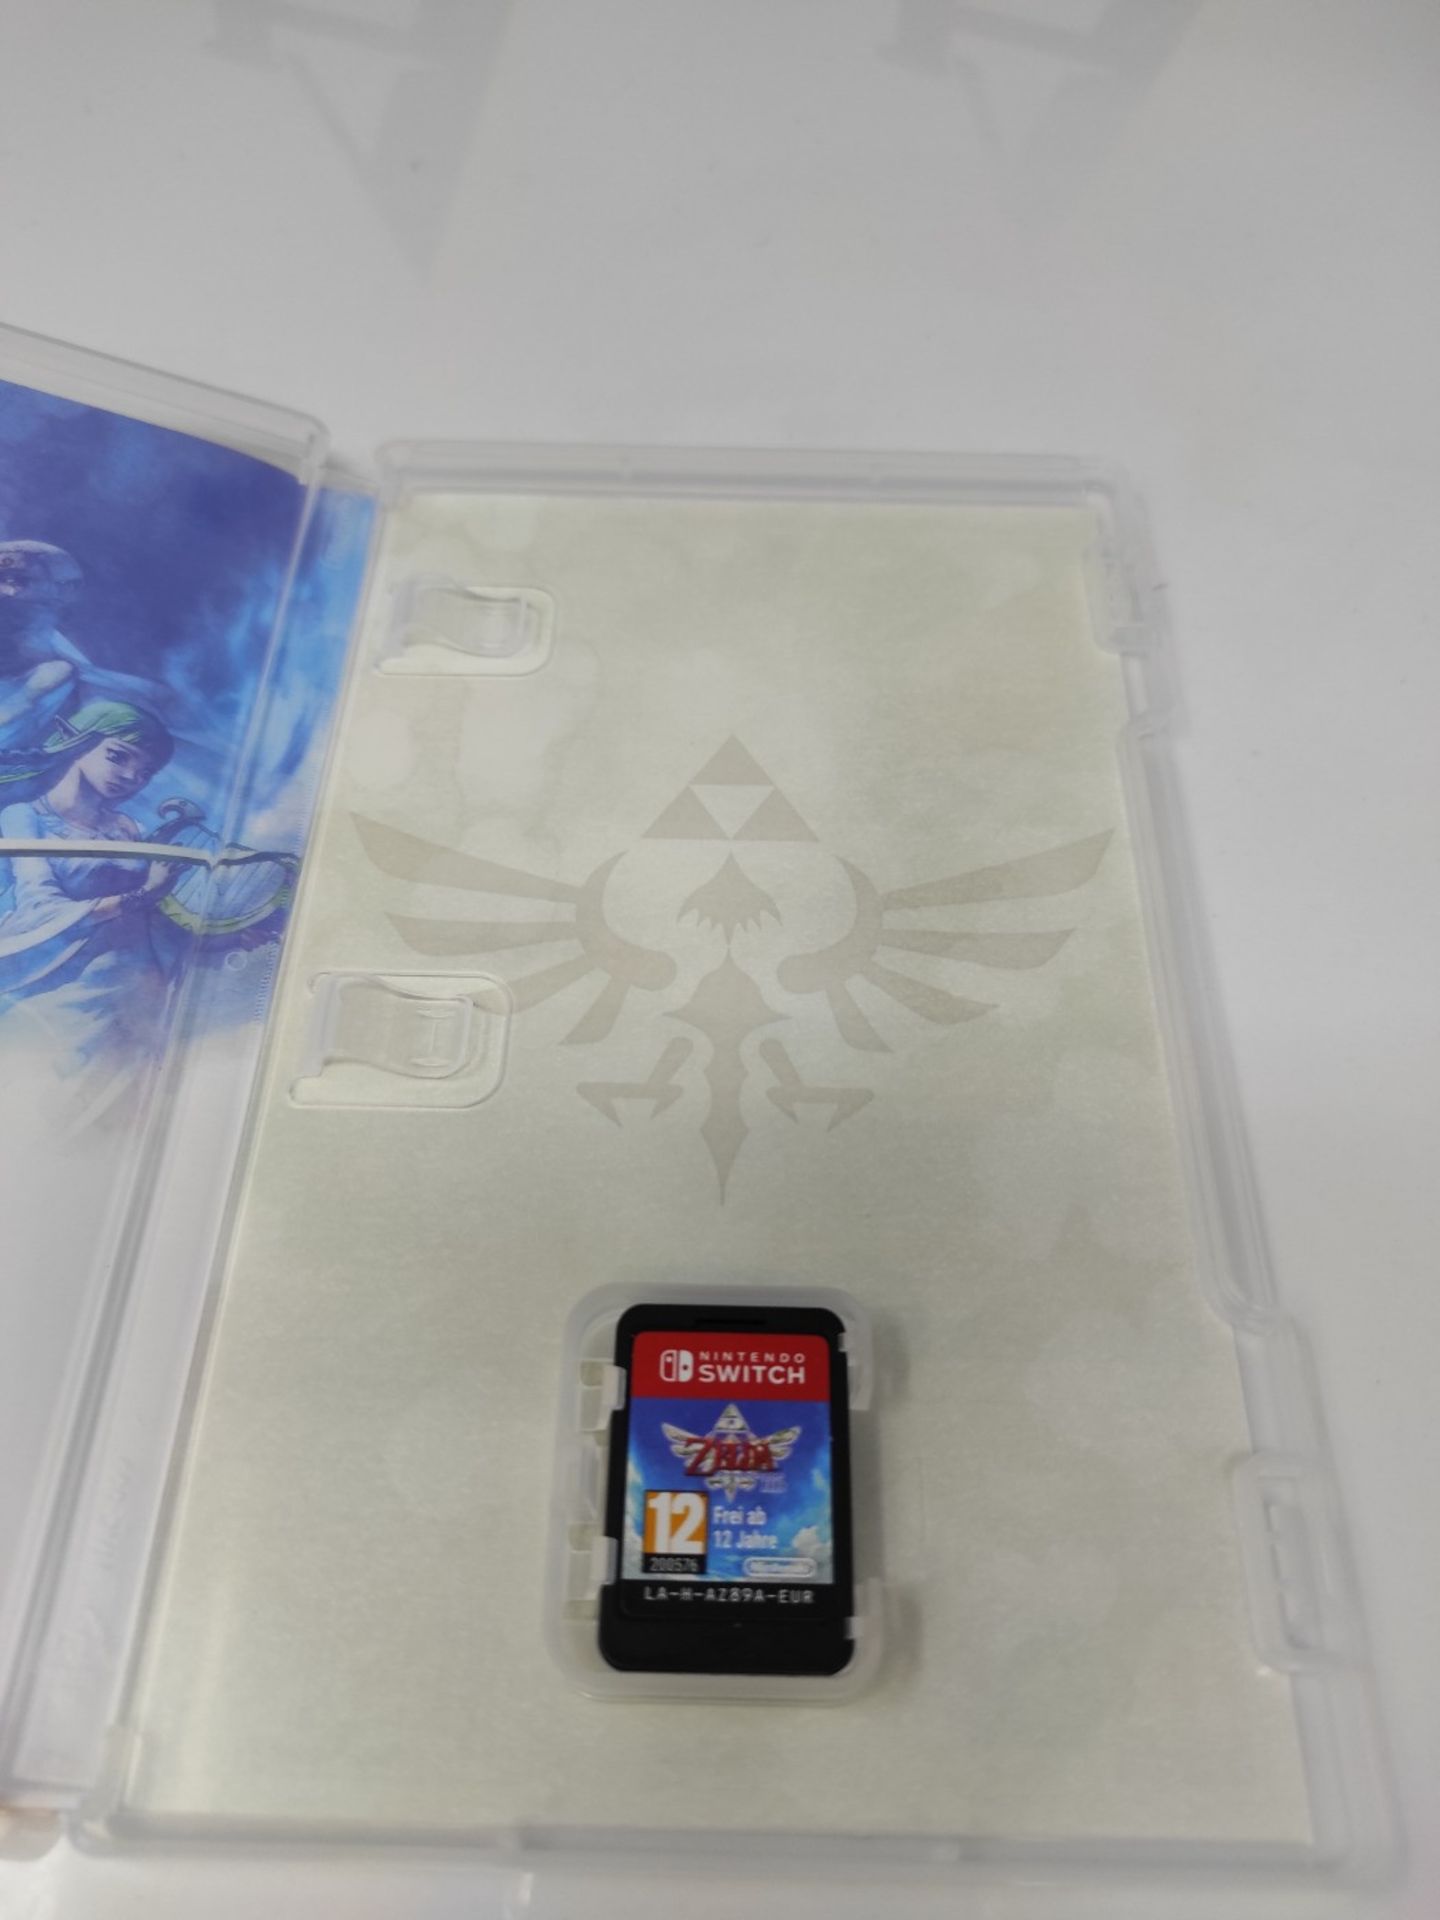 The Legend of Zelda: Skyward Sword - HD - Nintendo Video Game - Italian Edition - Cart - Image 6 of 6